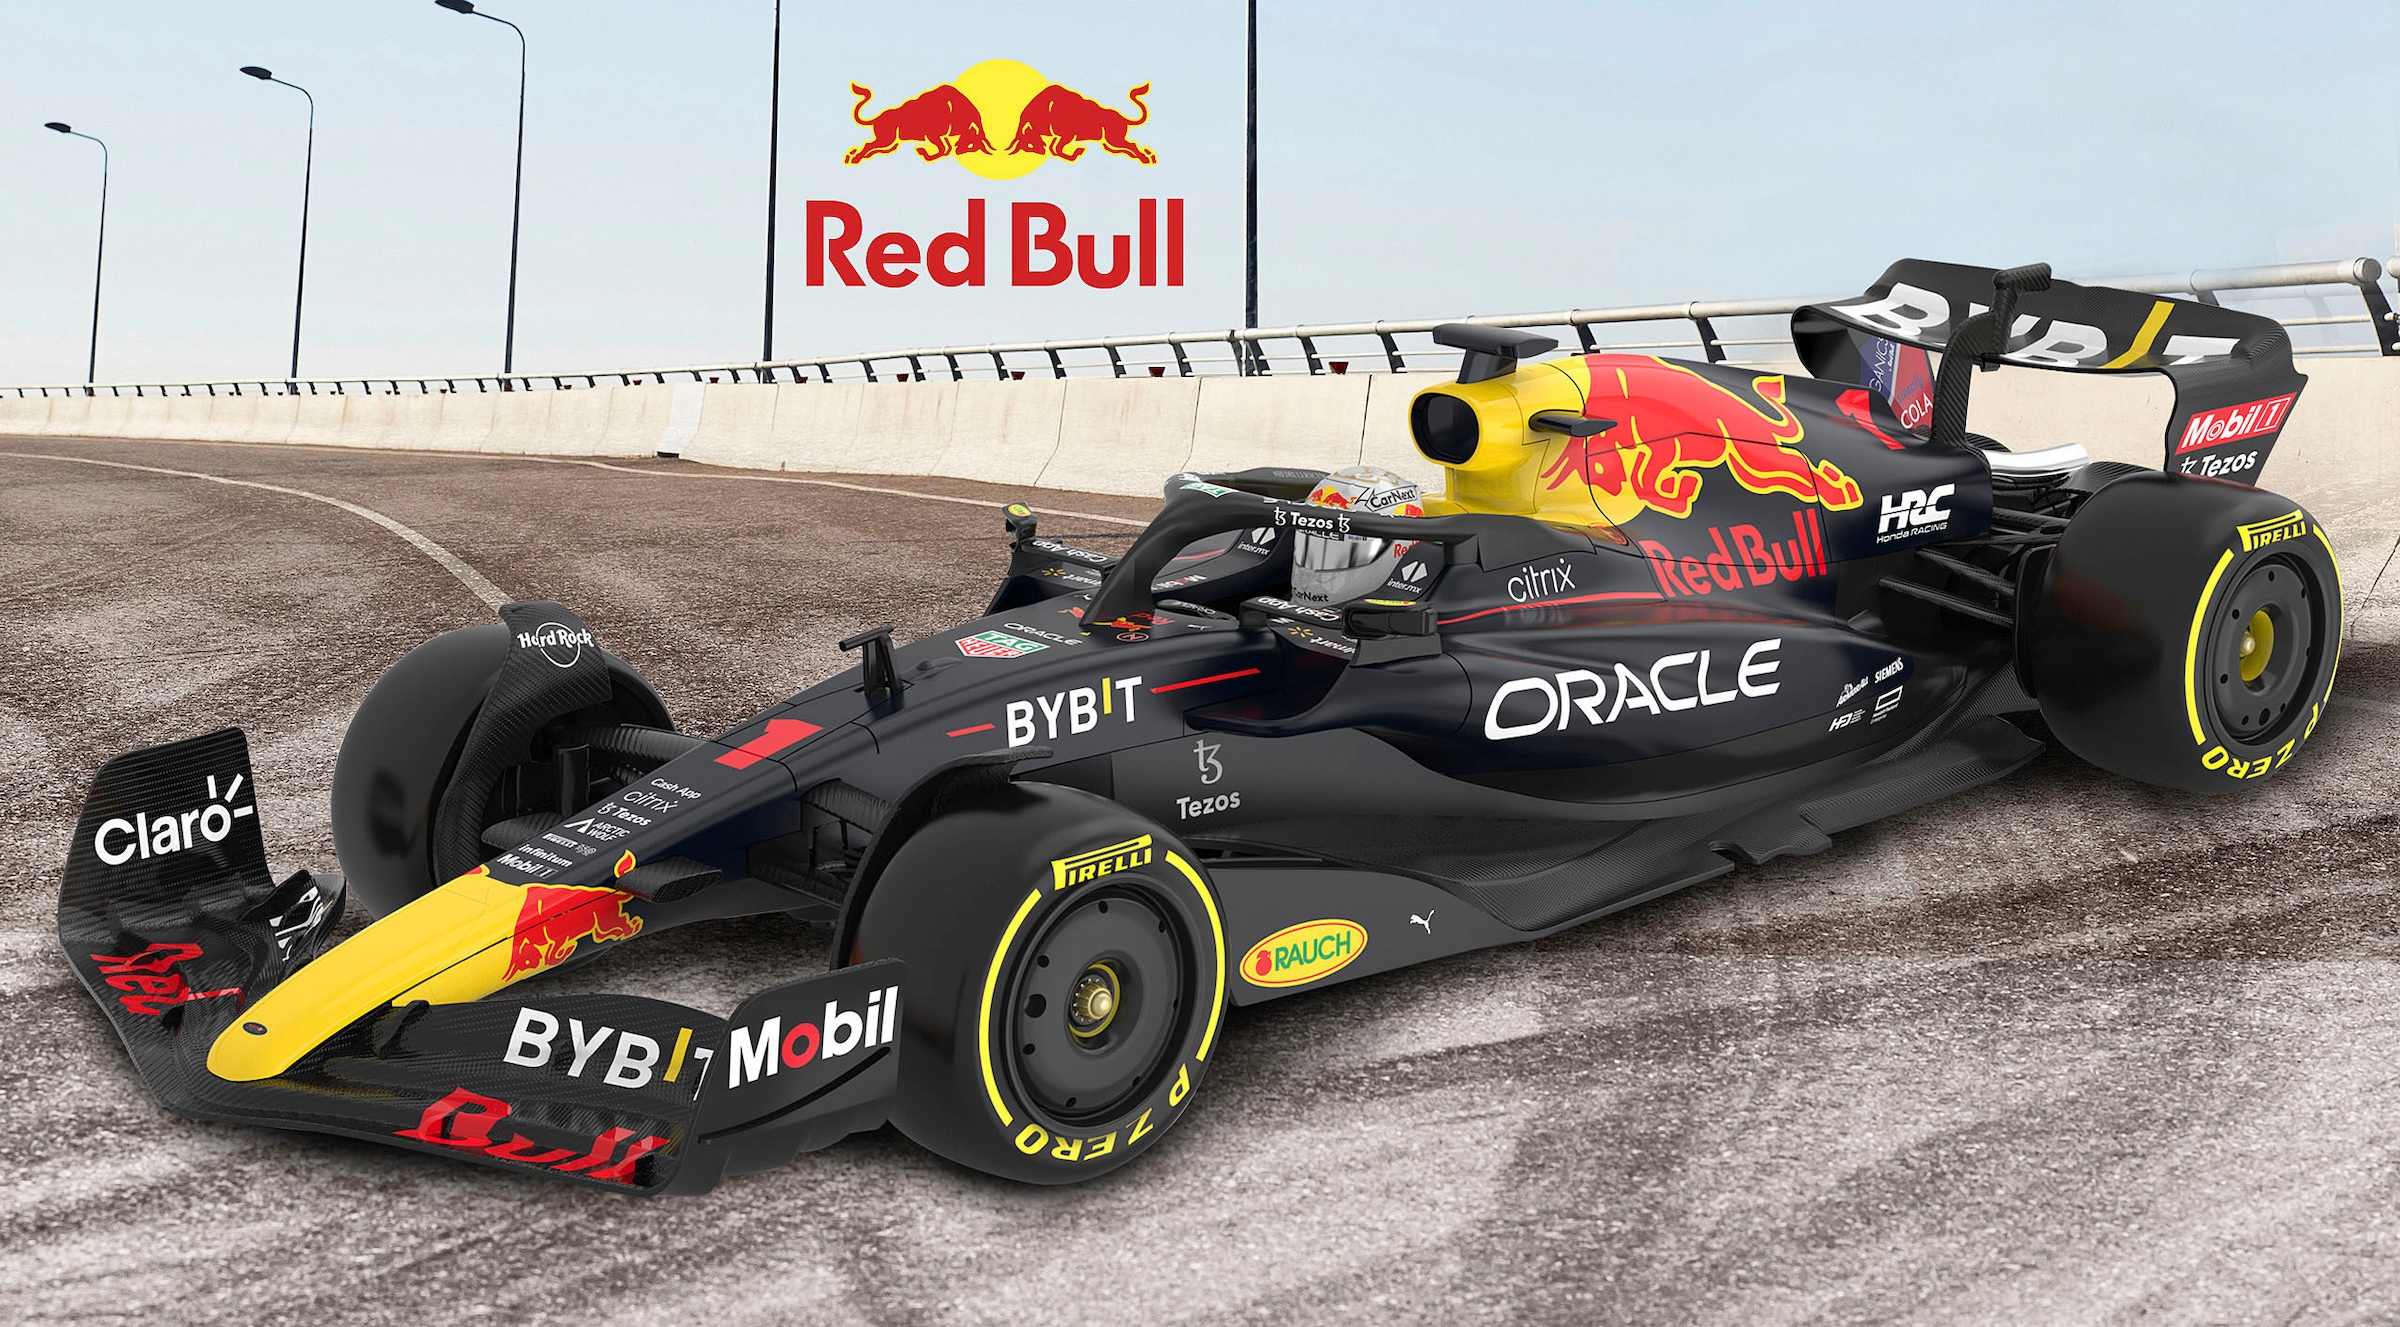 Jamara RC-Auto »Deluxe Cars, Oracle Red Bull Racing RB18 1:12, dunkelblau - 2,4 GHz«